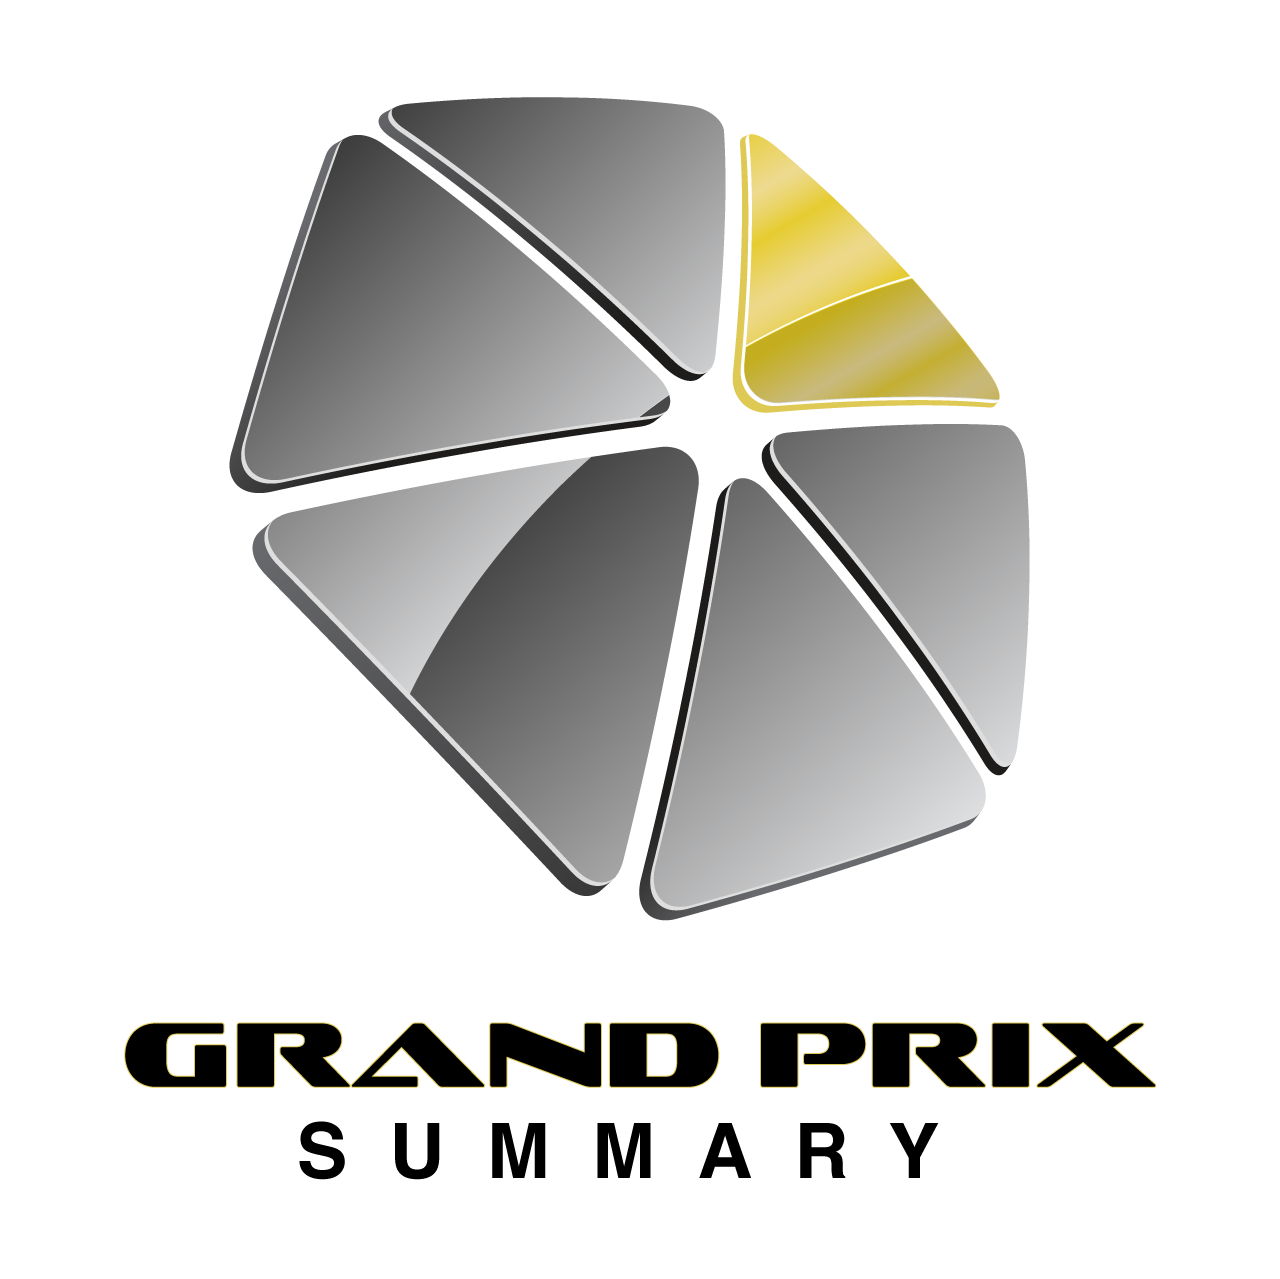 Grand Prix Logo PNG Pic